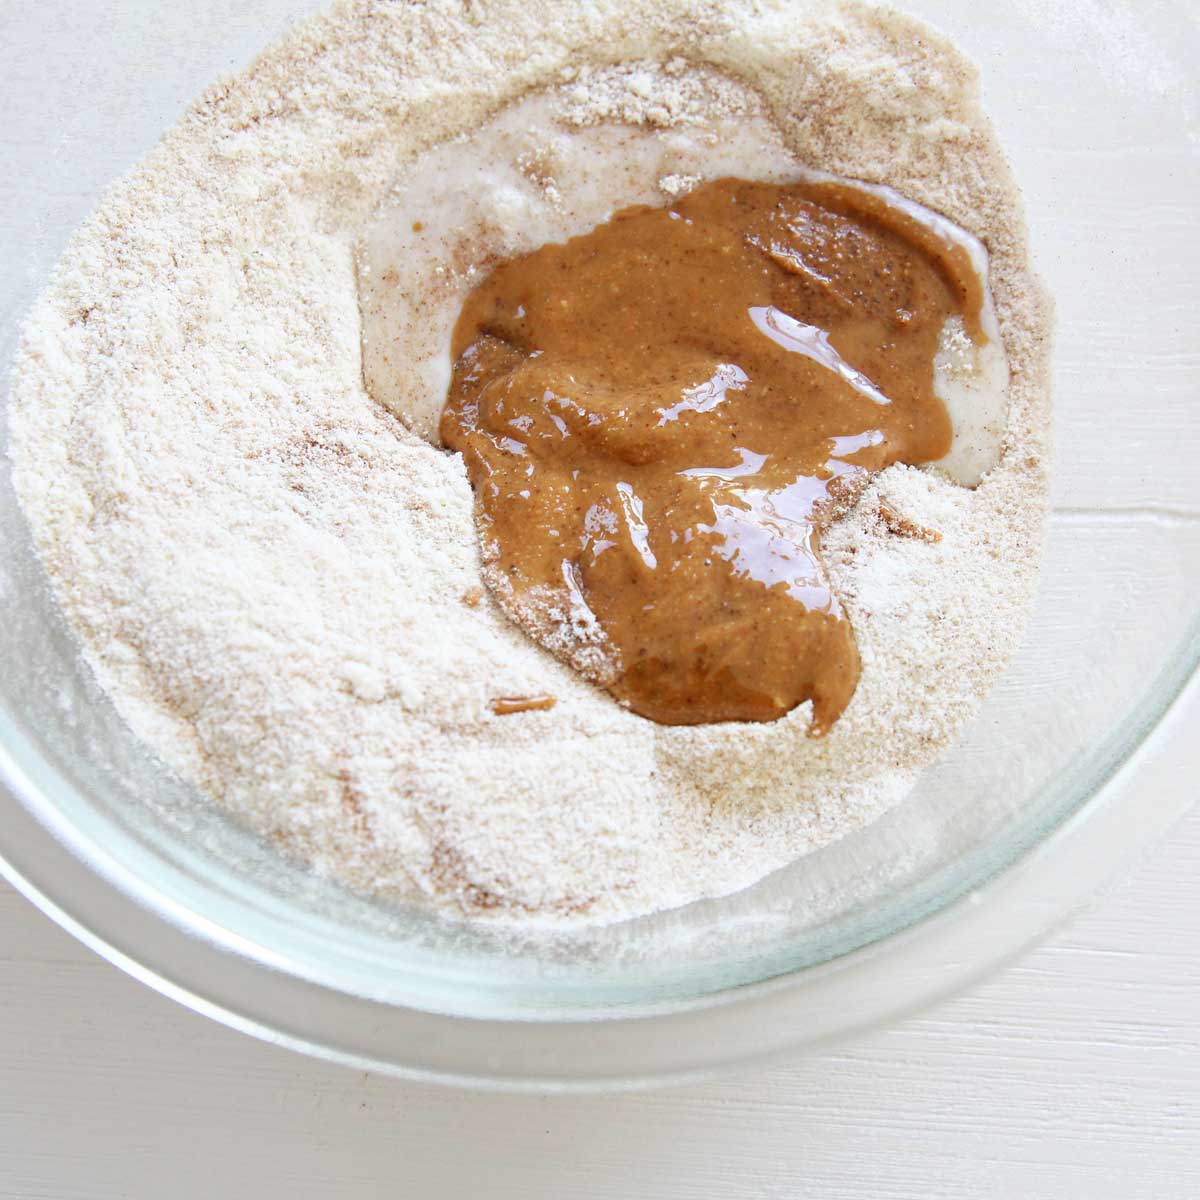 Gingerbread Collagen Protein Bars: a Healthier Festive Snack - Gingerbread Collagen Protein Bars